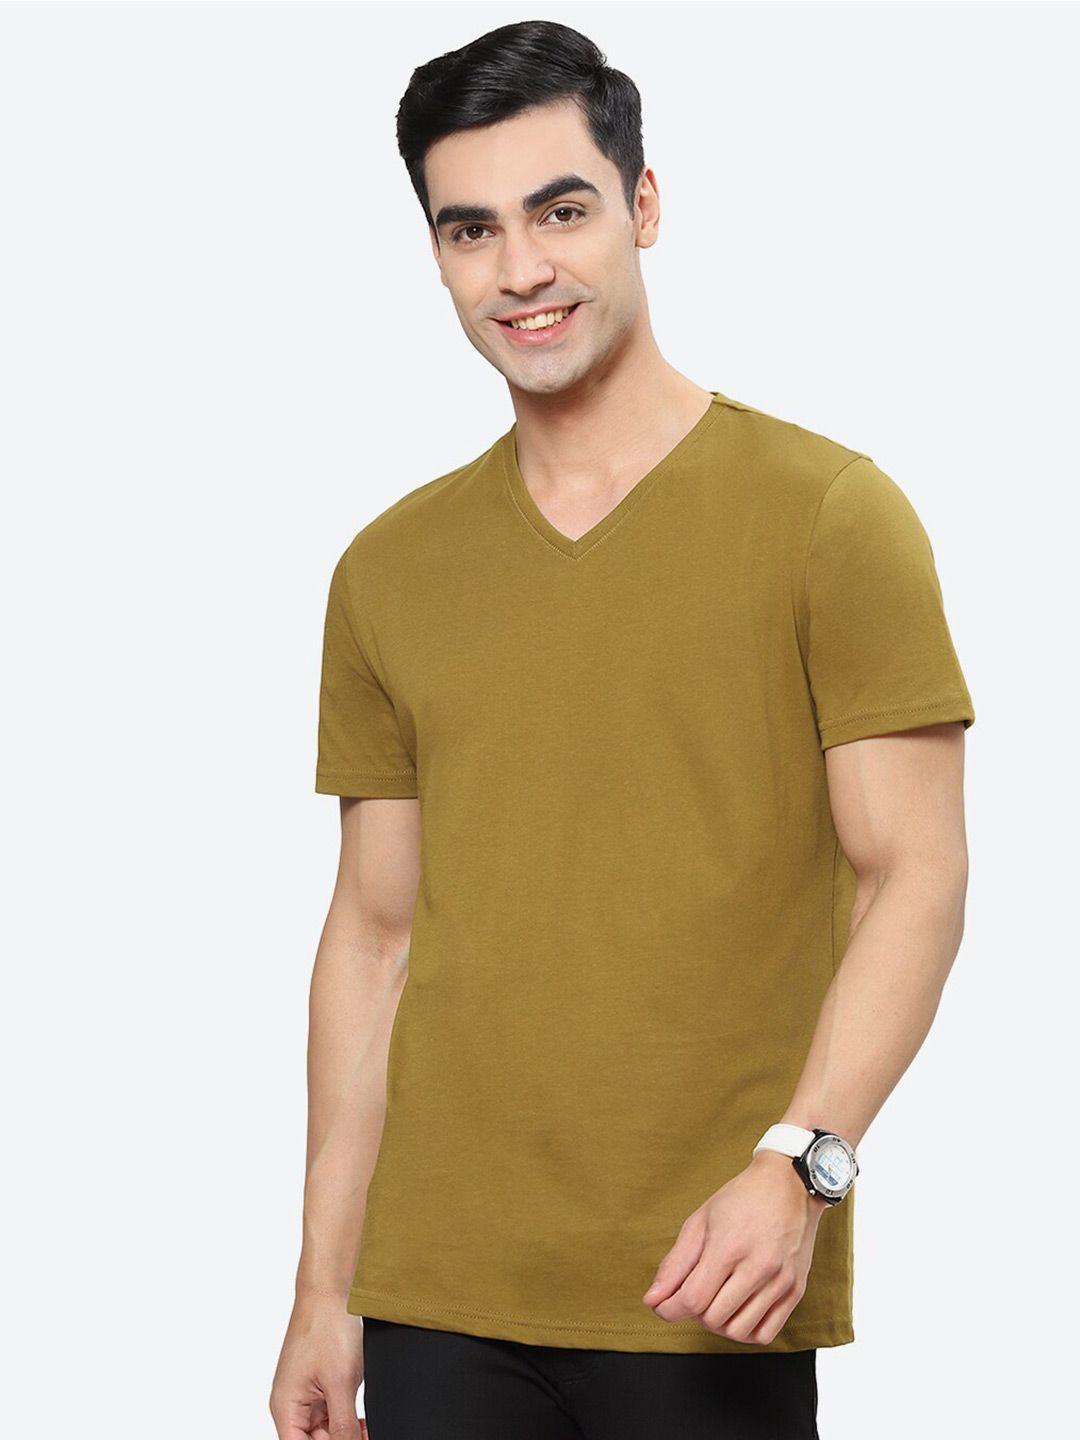 2bme v-neck short sleeves cotton t-shirt